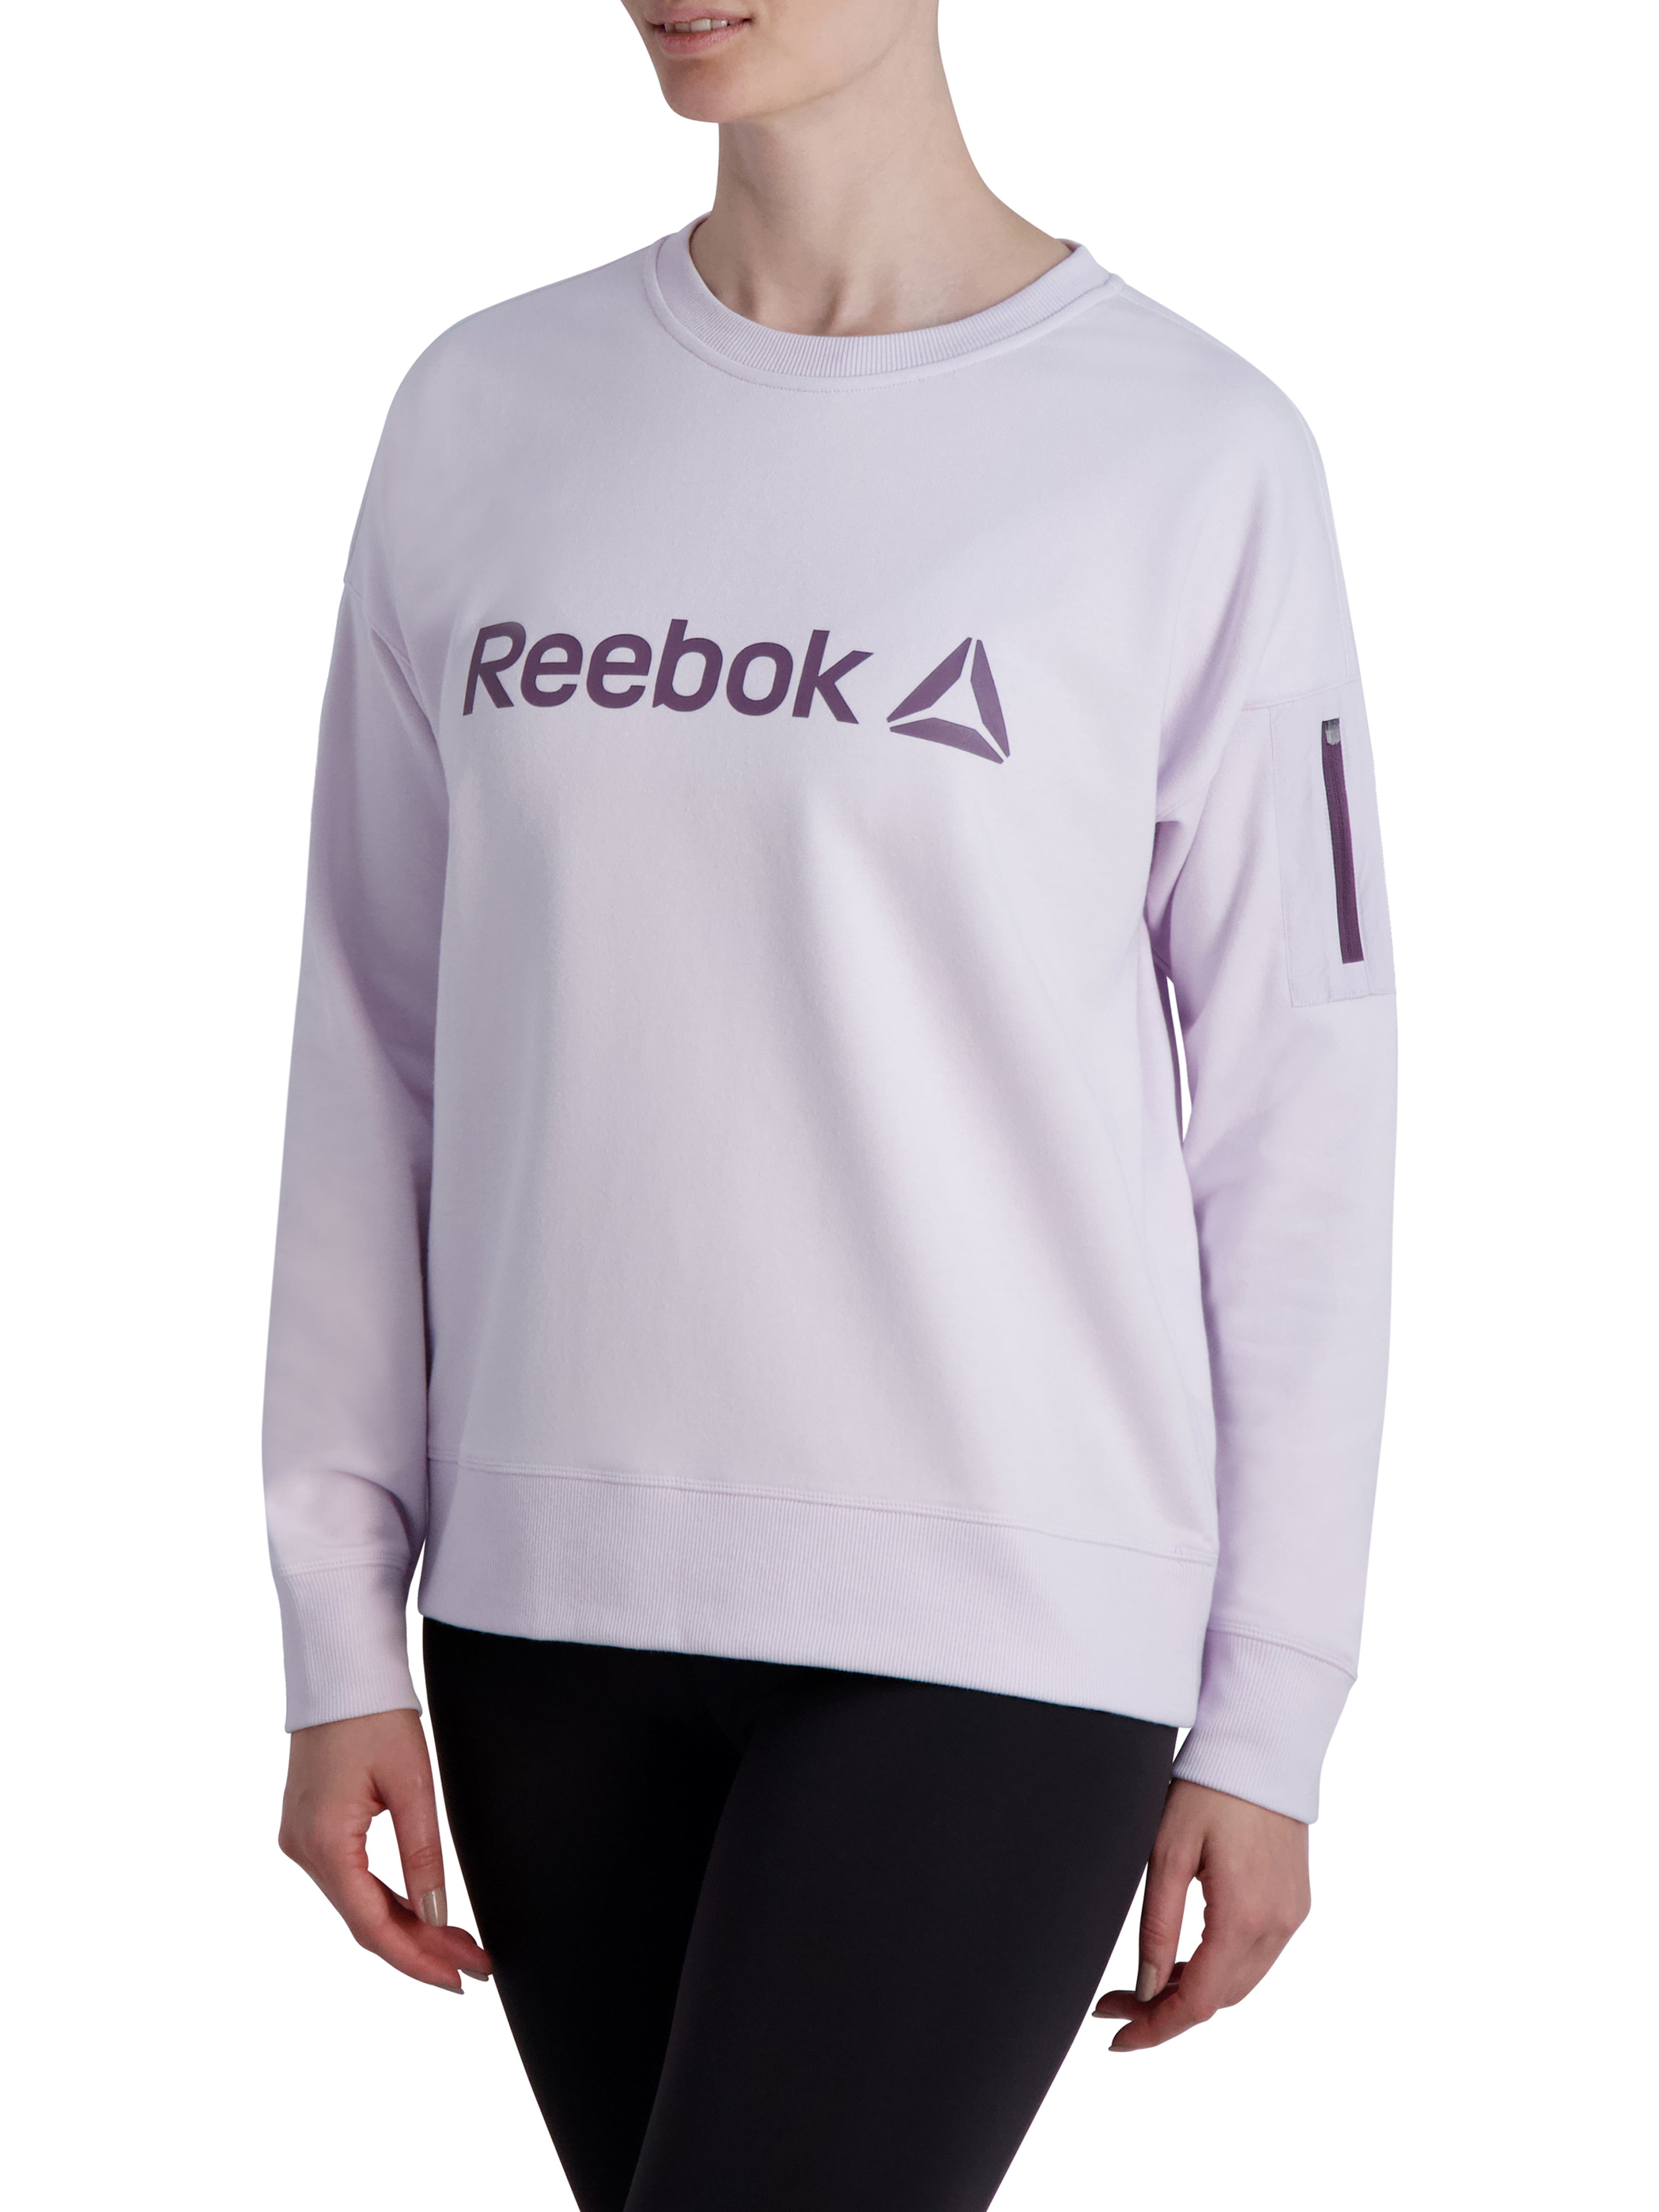 Reebok Women's up Crewneck Sweatshirt with Woven Zippered Arm Pocket - Walmart.com